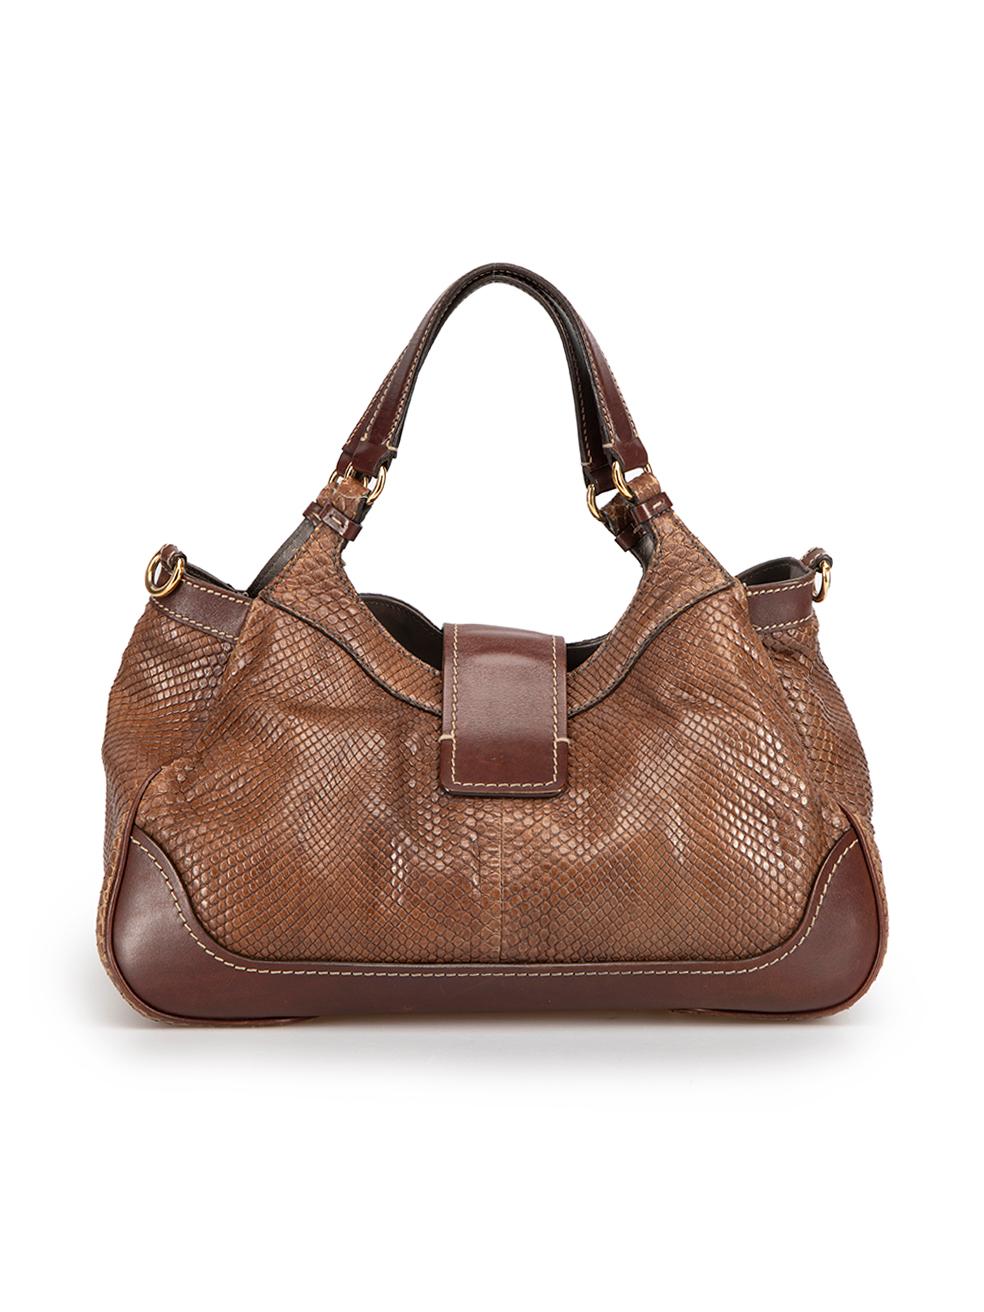 Salvatore Ferragamo Women's Brown Snakeskin Gancini Bag In Good Condition For Sale In London, GB